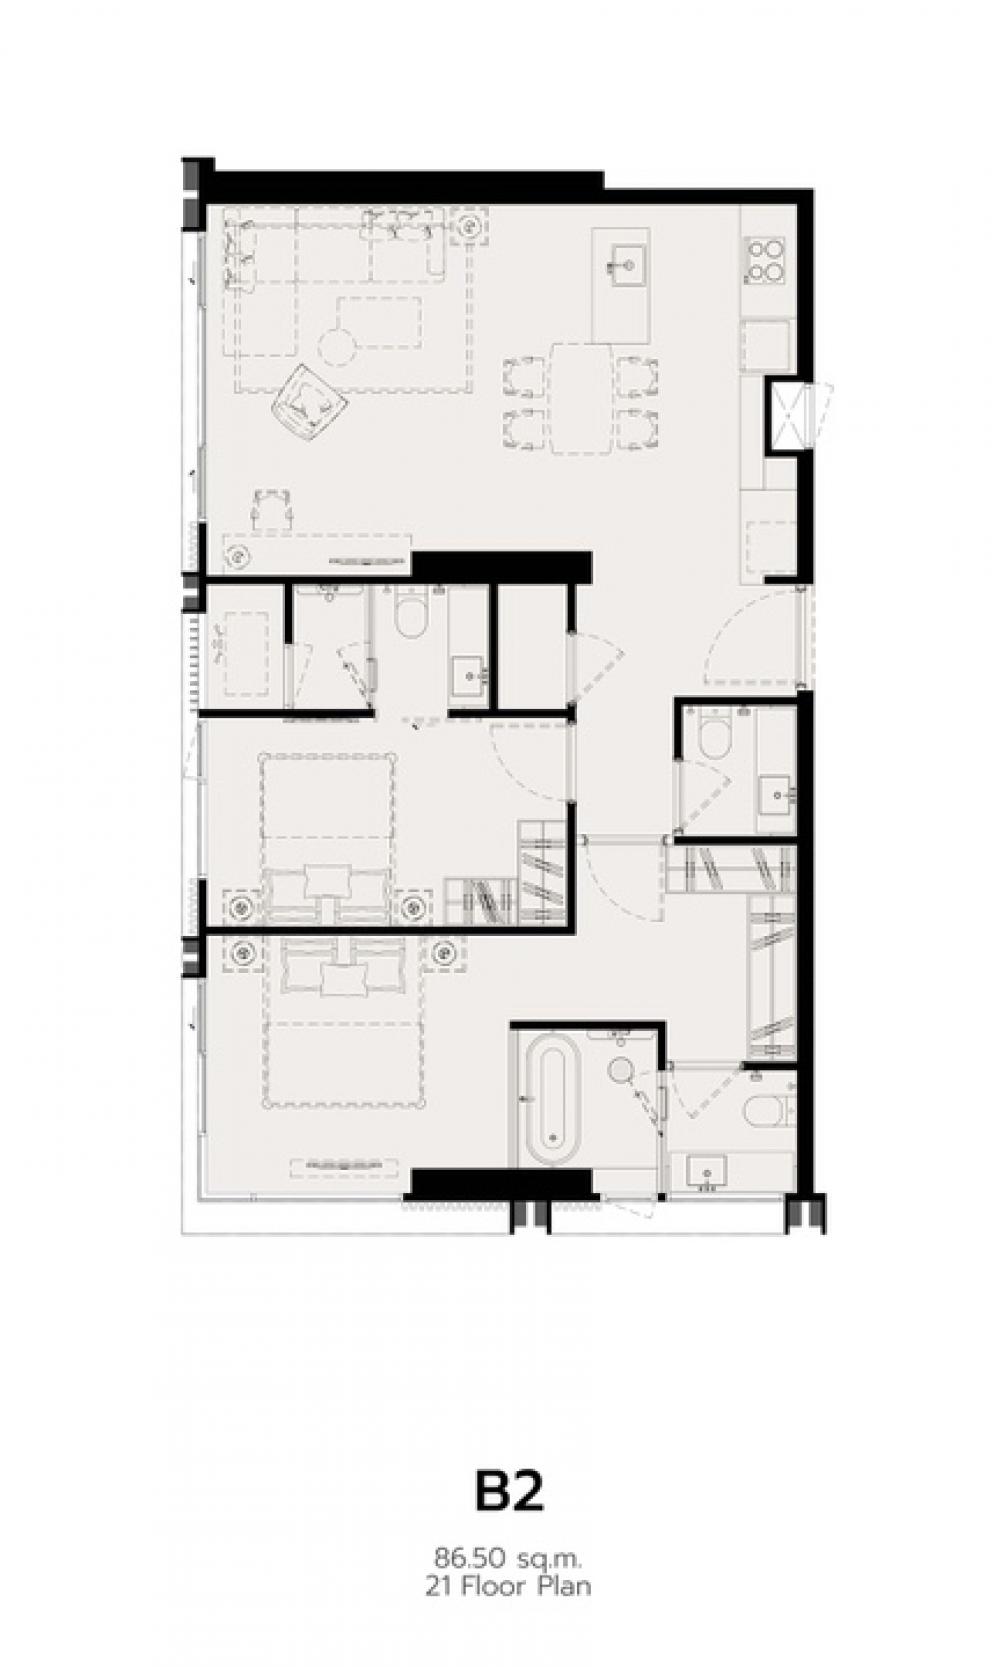 Sale DownCondoSilom, Saladaeng, Bangrak : Romm Convent 2-Bedroom, exceptional layout with reasonable price!